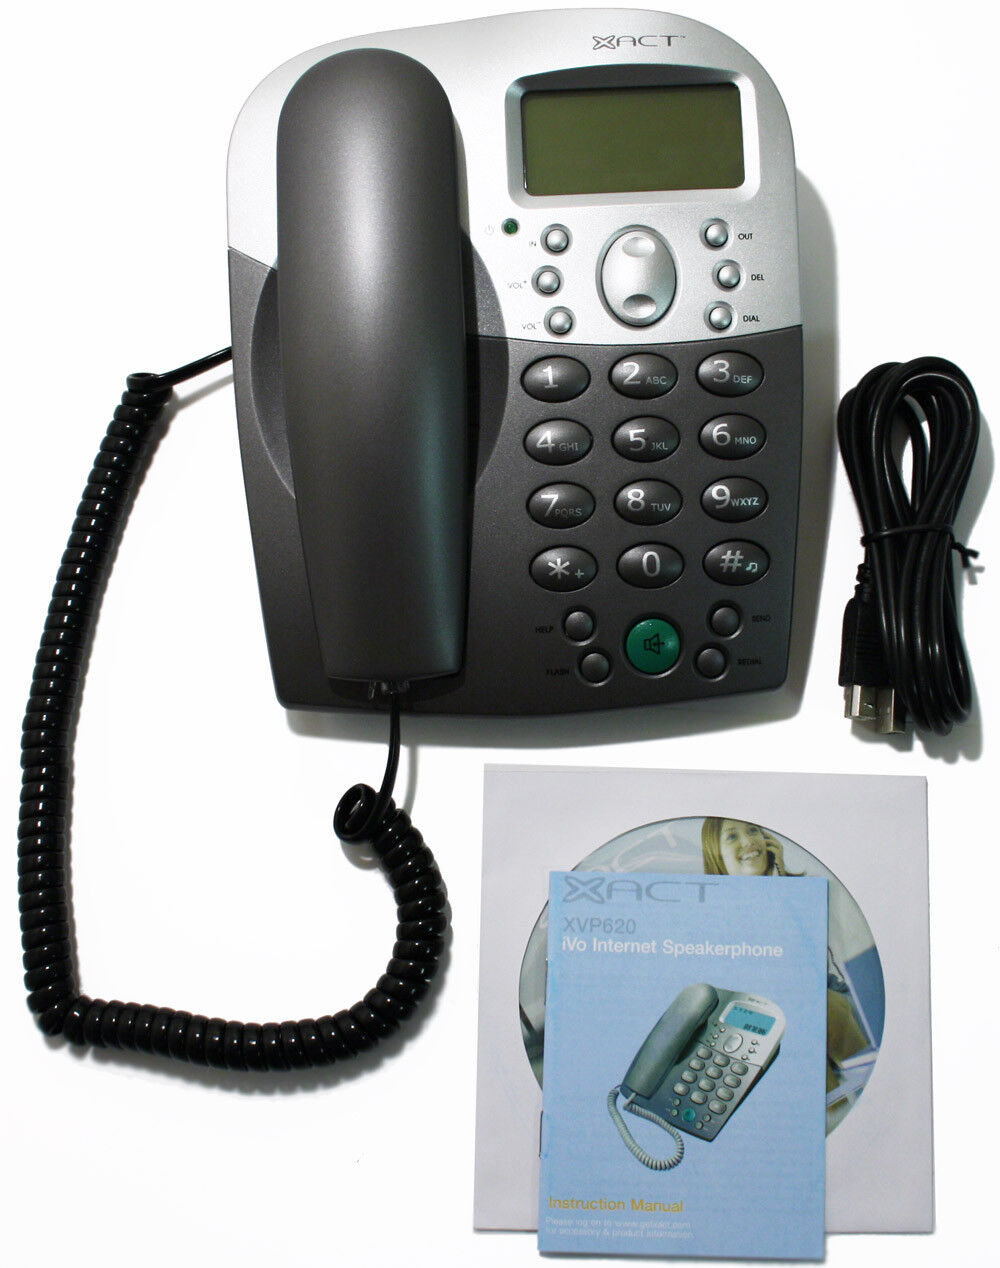 Xact XVP620 USB Windows VoIP Skype Internet Phone Free Calling To Skype Users